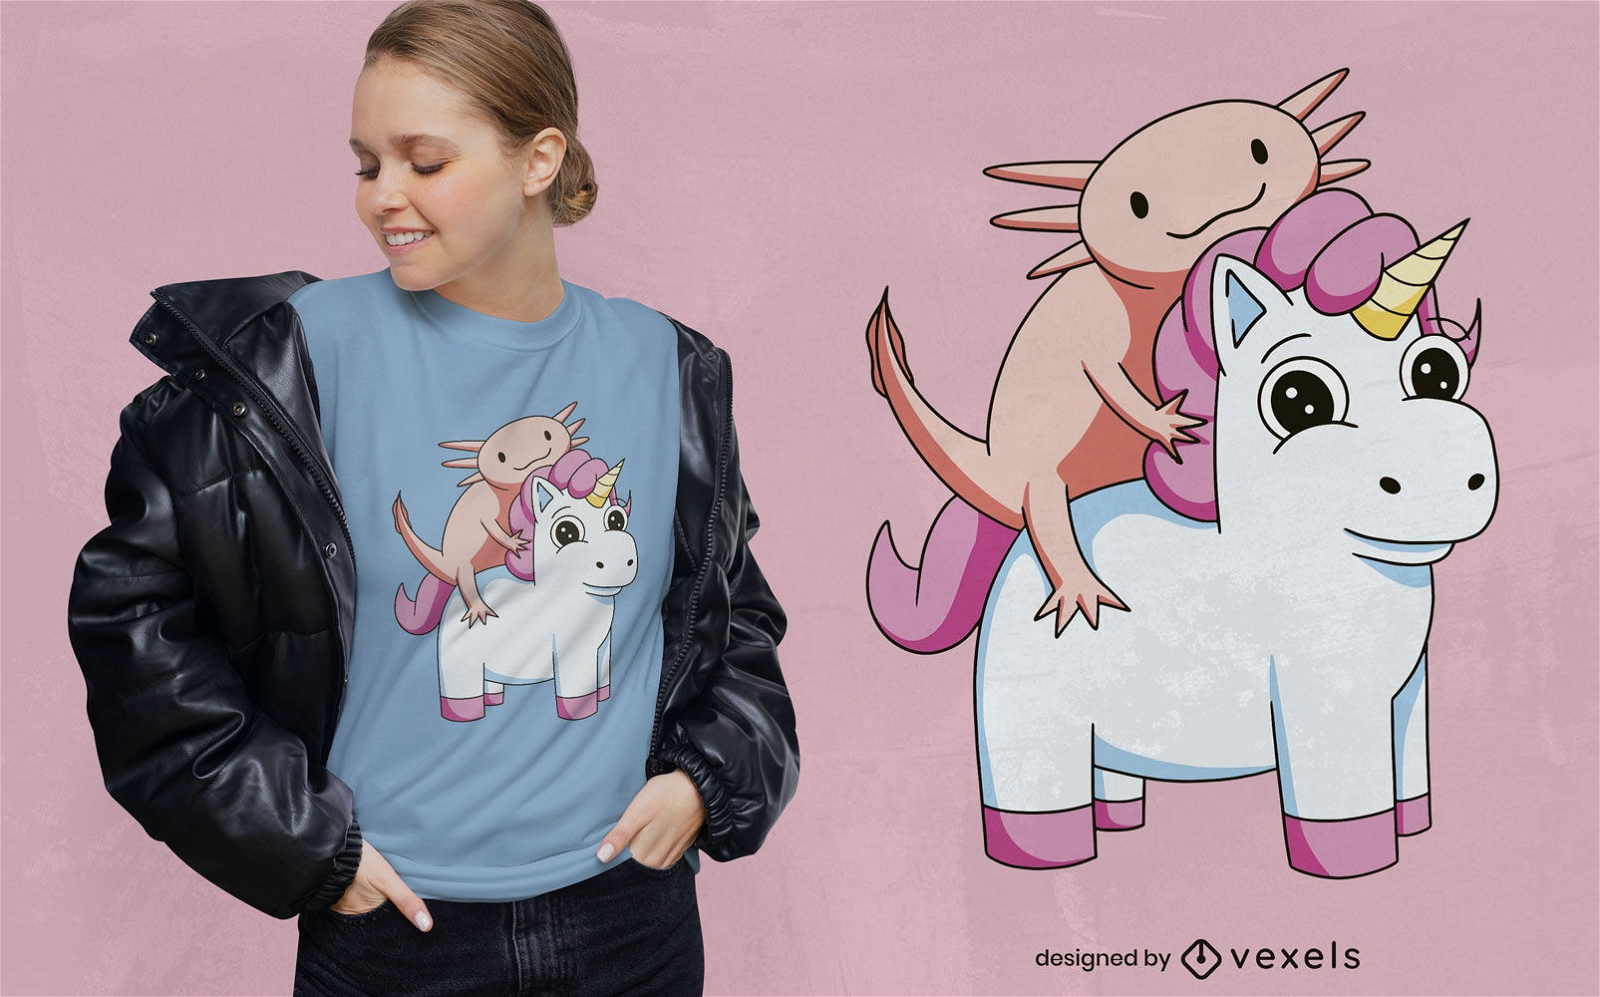 Axolotl and unicorn friends t-shirt design